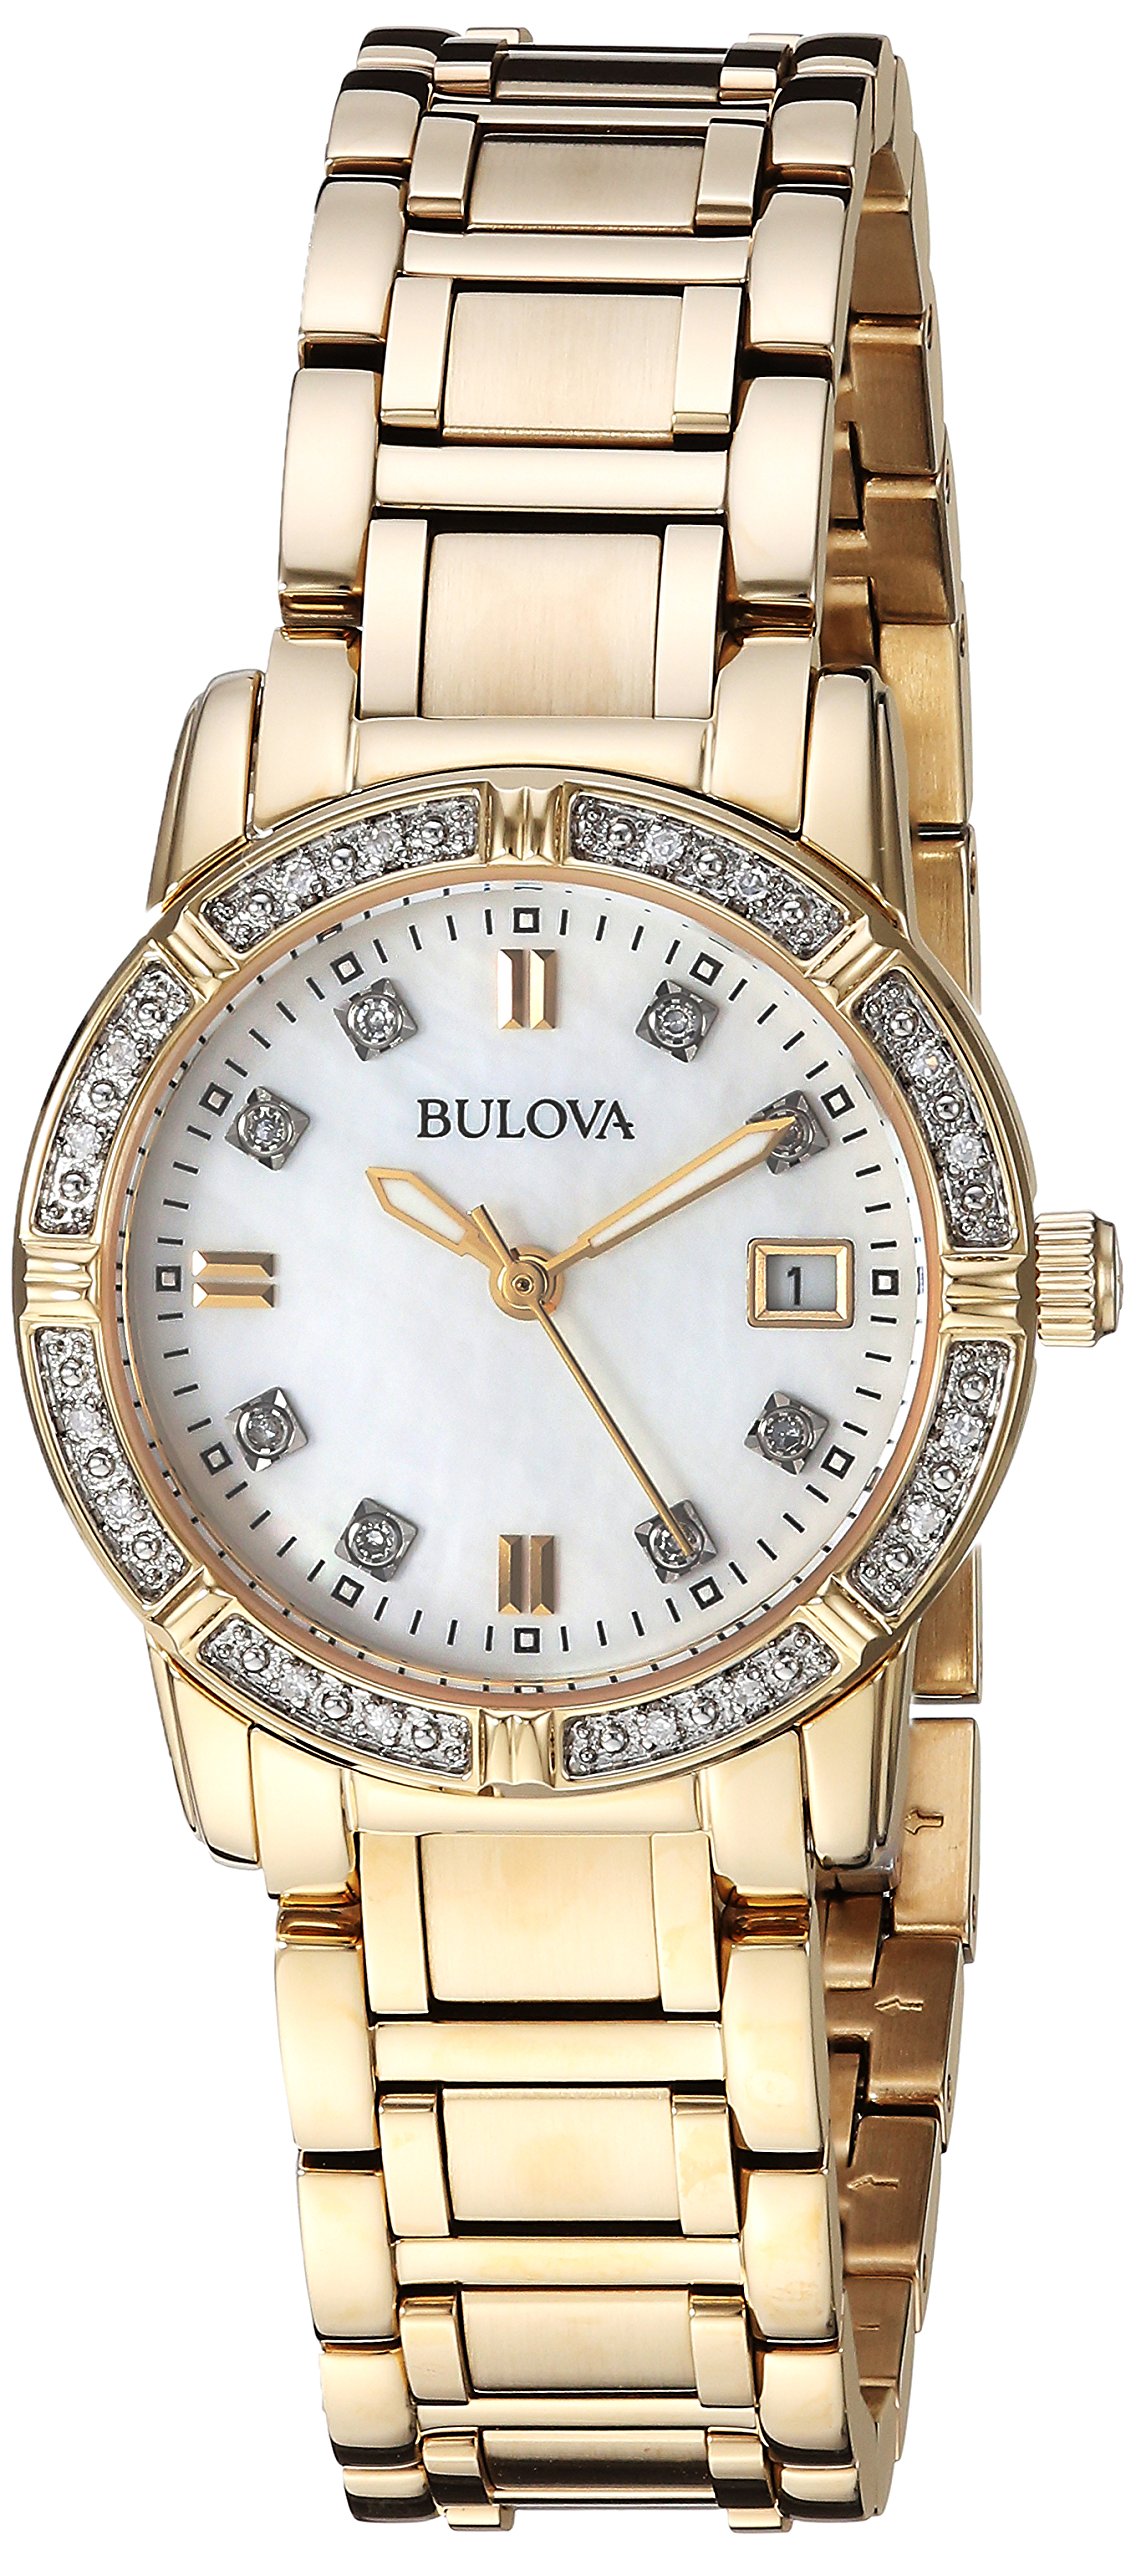 Bulova Highbridge Gold-Tone Ladies Watch 98R135